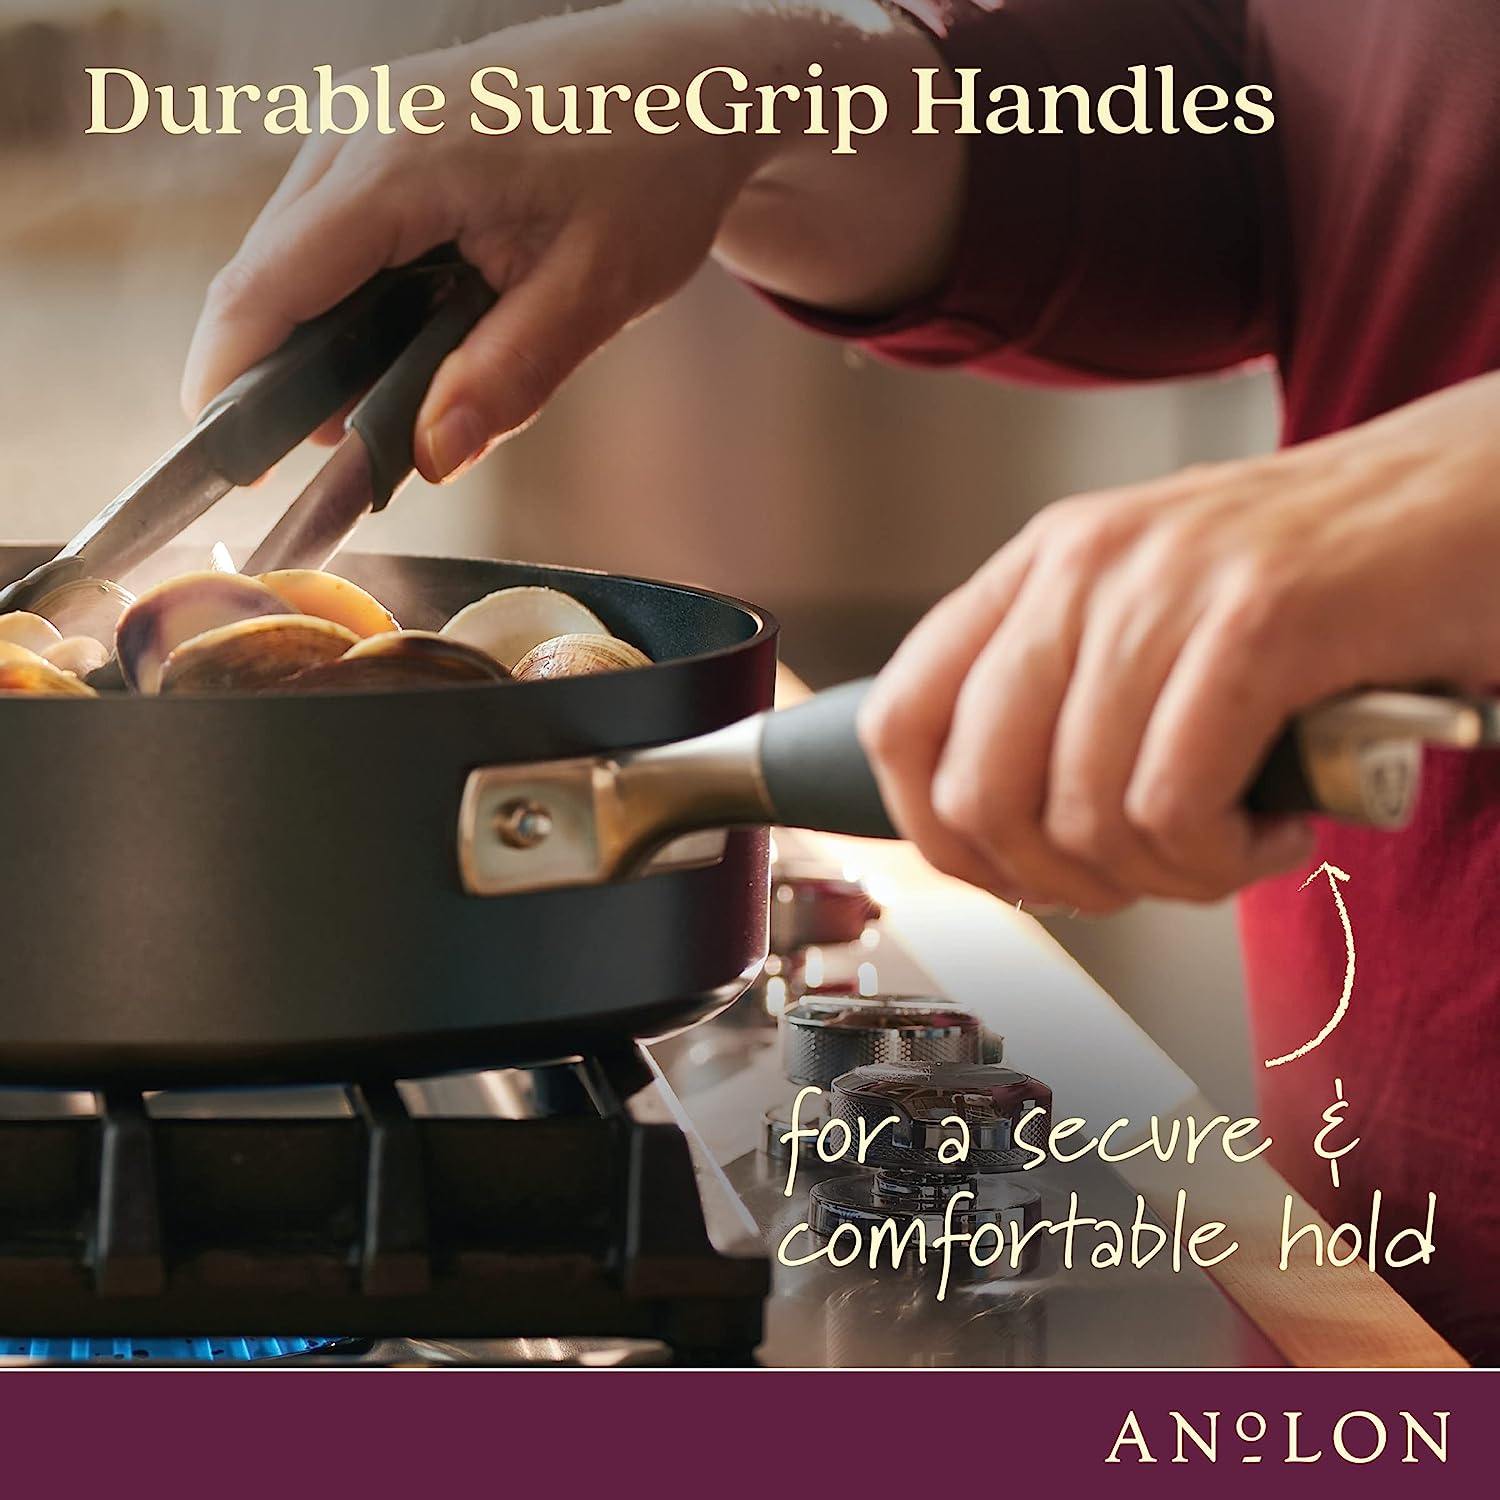 Anolon Advanced Home Hard-Anodized Nonstick Open Stock Cookware (10 Qt Stock Pot, Moonstone)